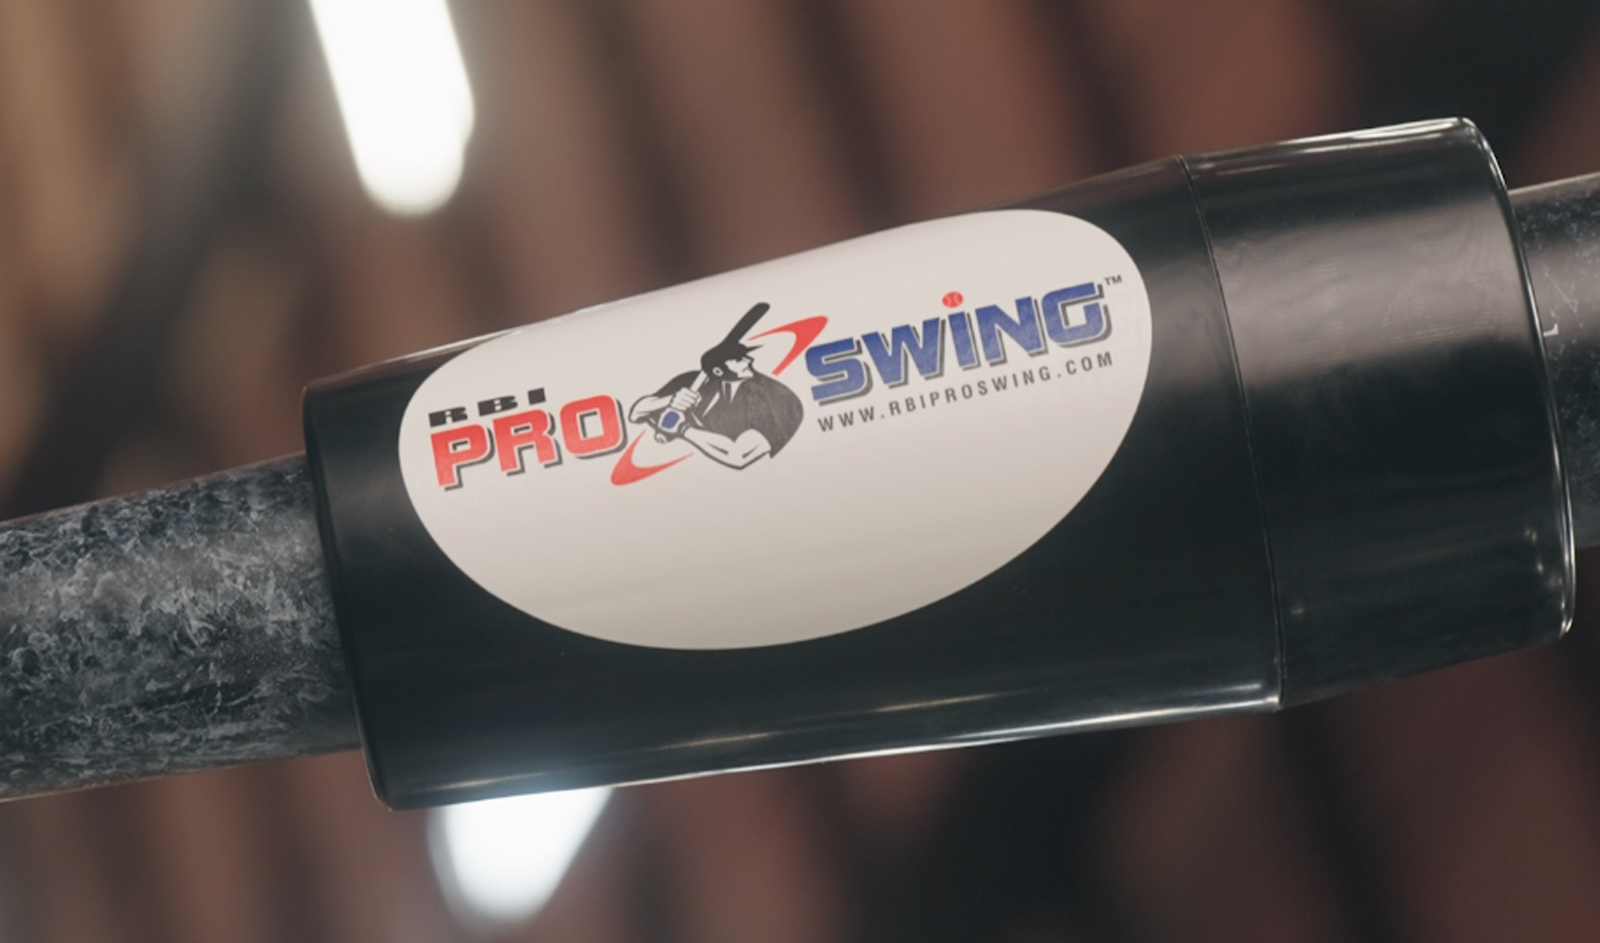 RBI Pro Swing – Mine Baseball